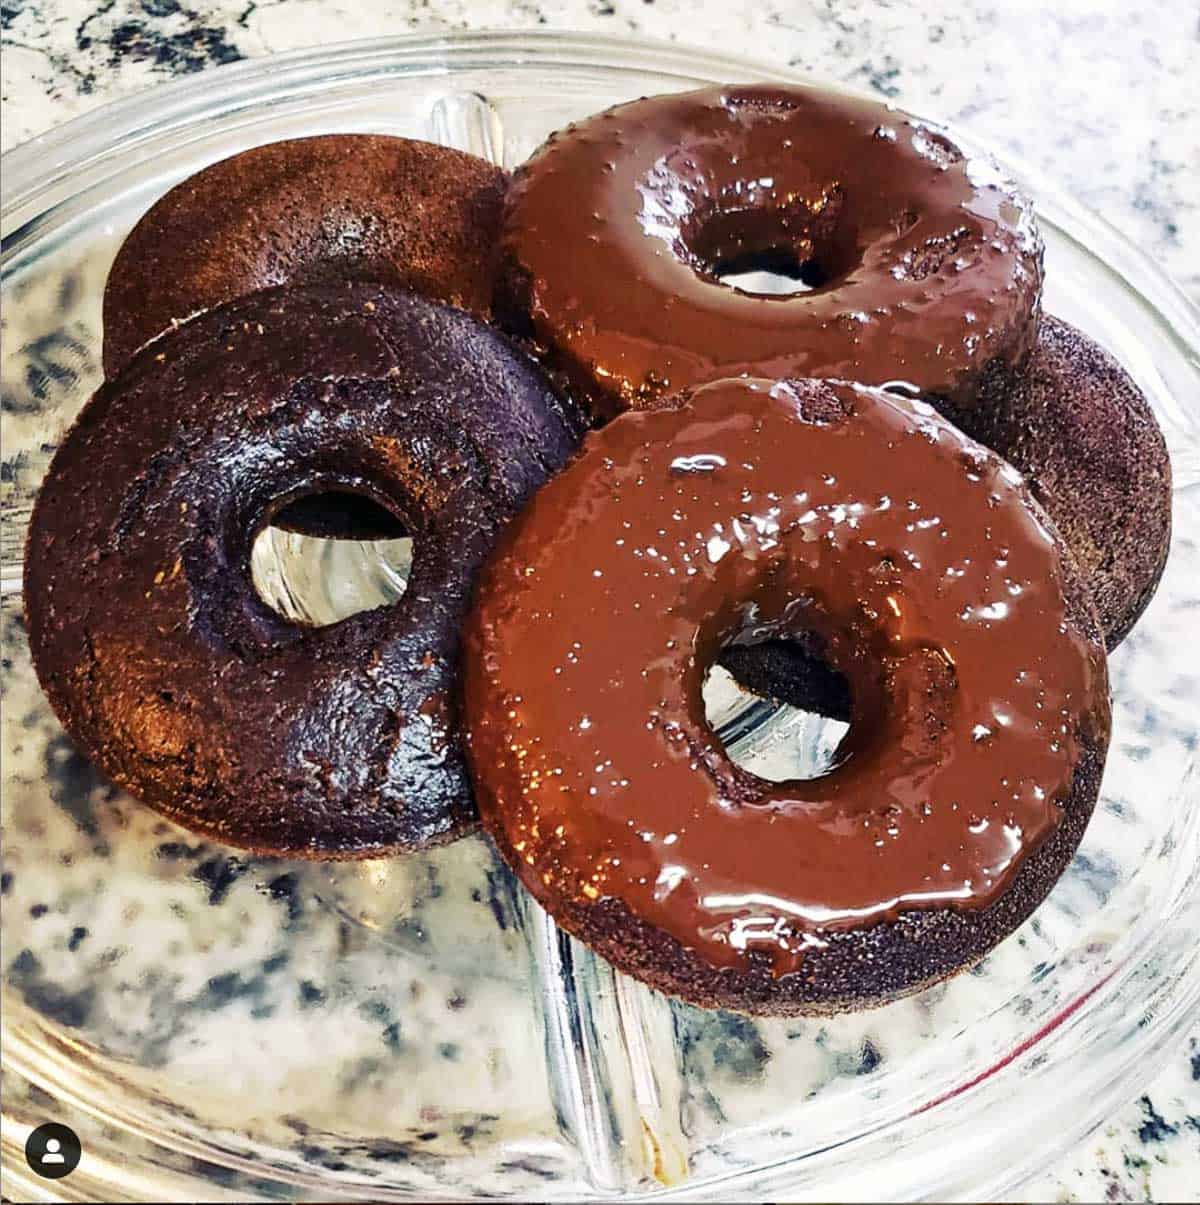 Keto donuts with a chocolate glaze. 